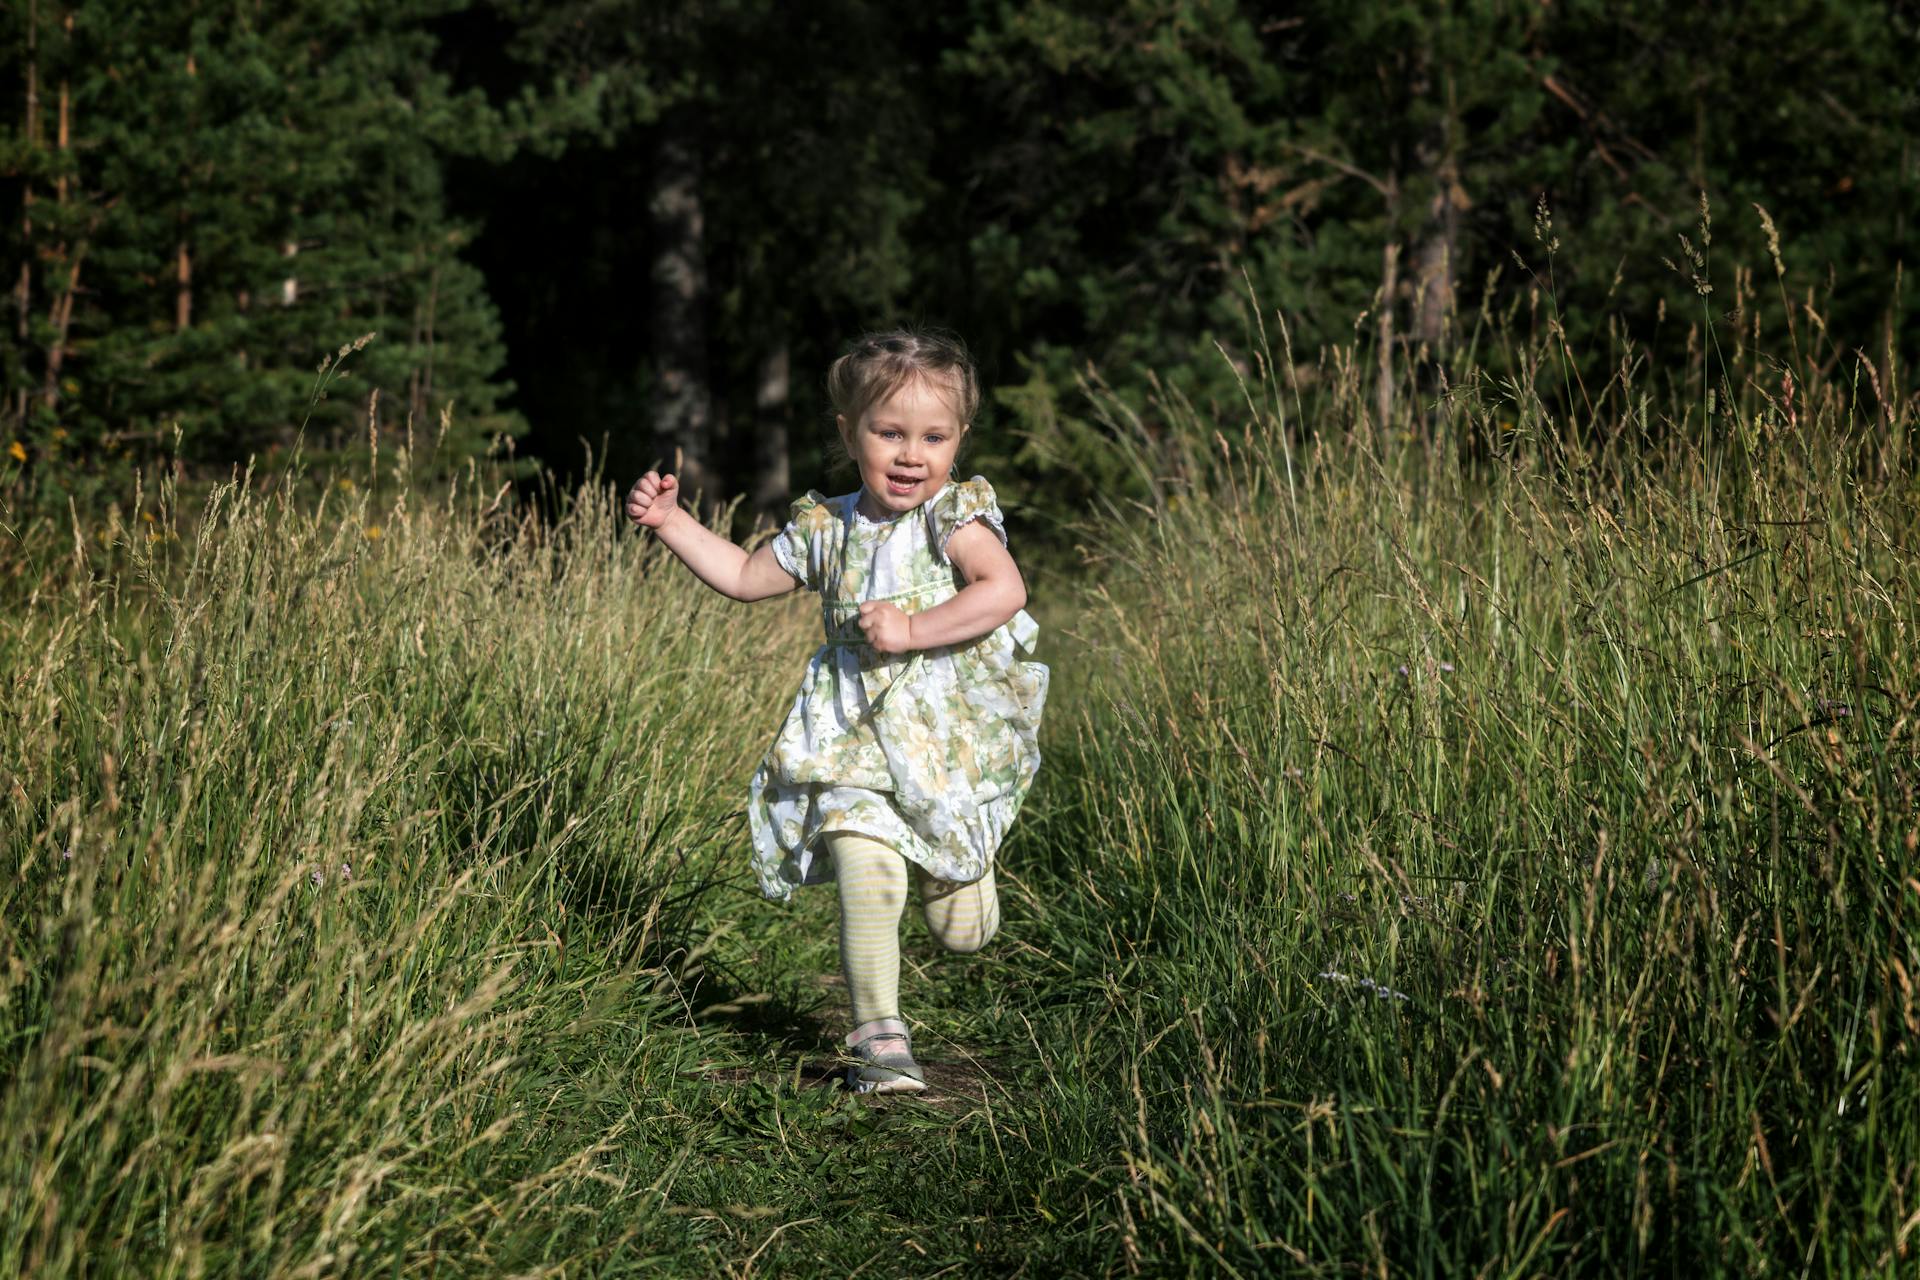 A little girl running on the grass | Source: Pexels